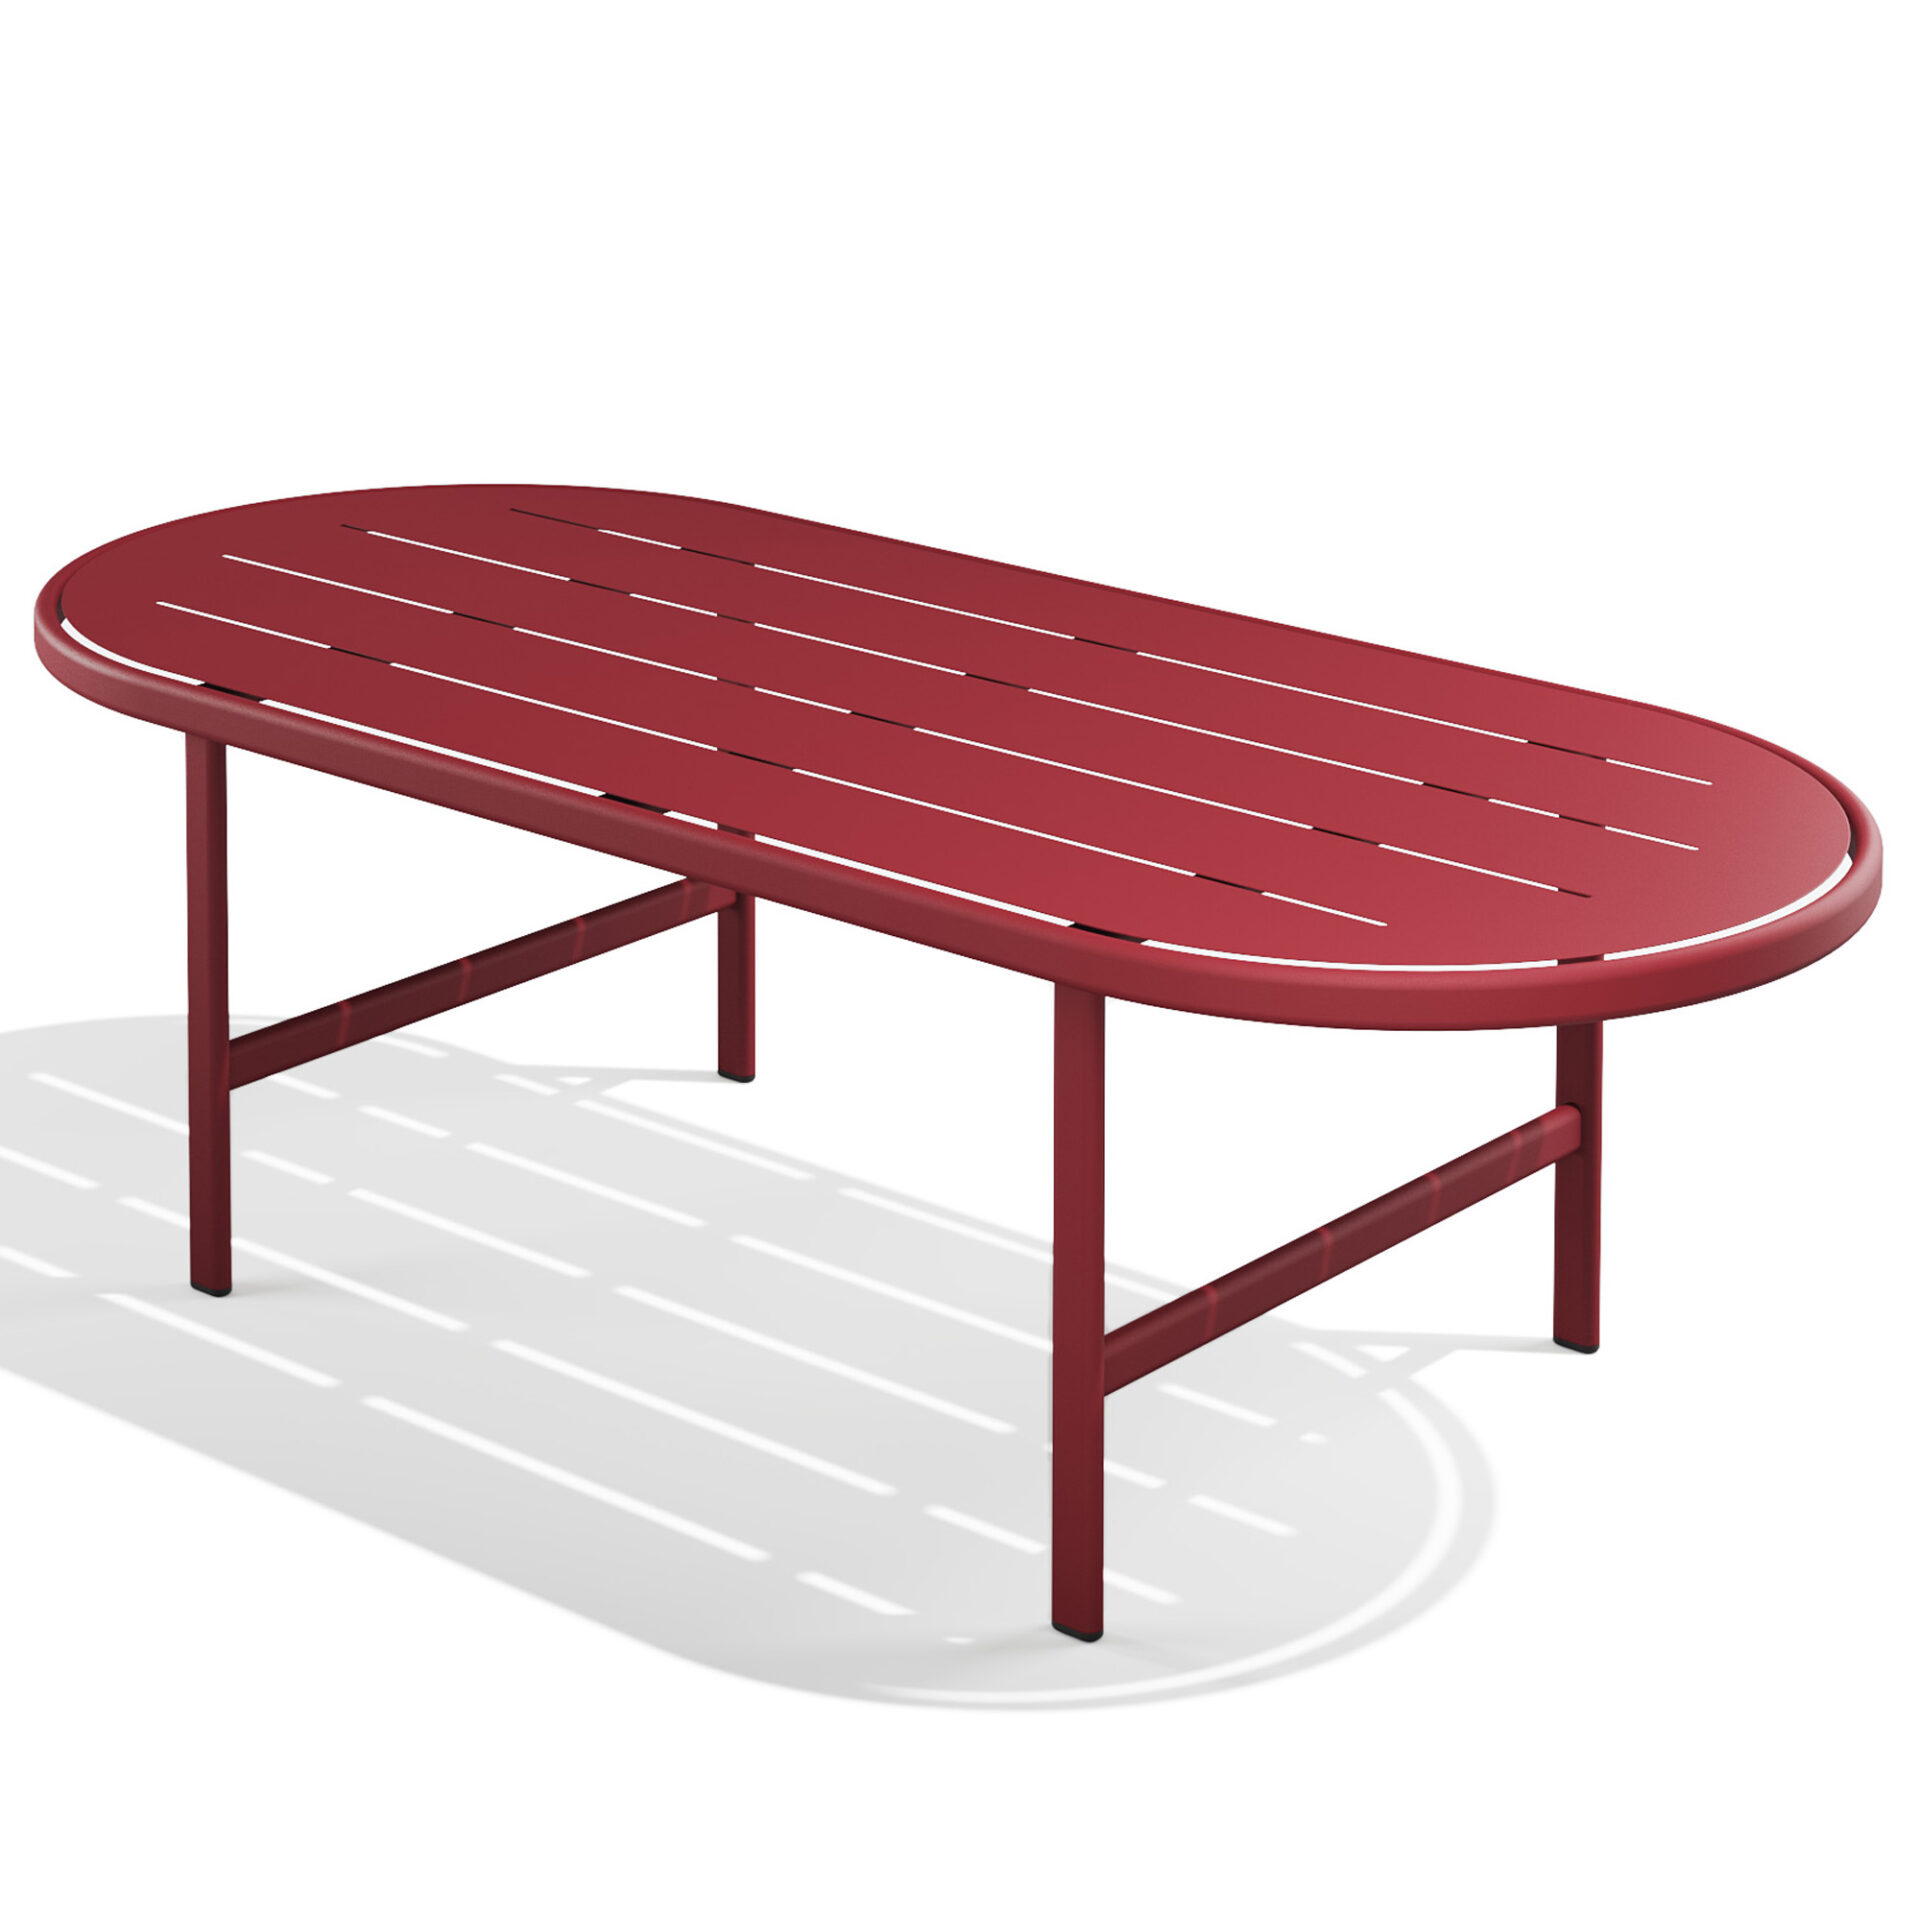 Kano rectangular table 250